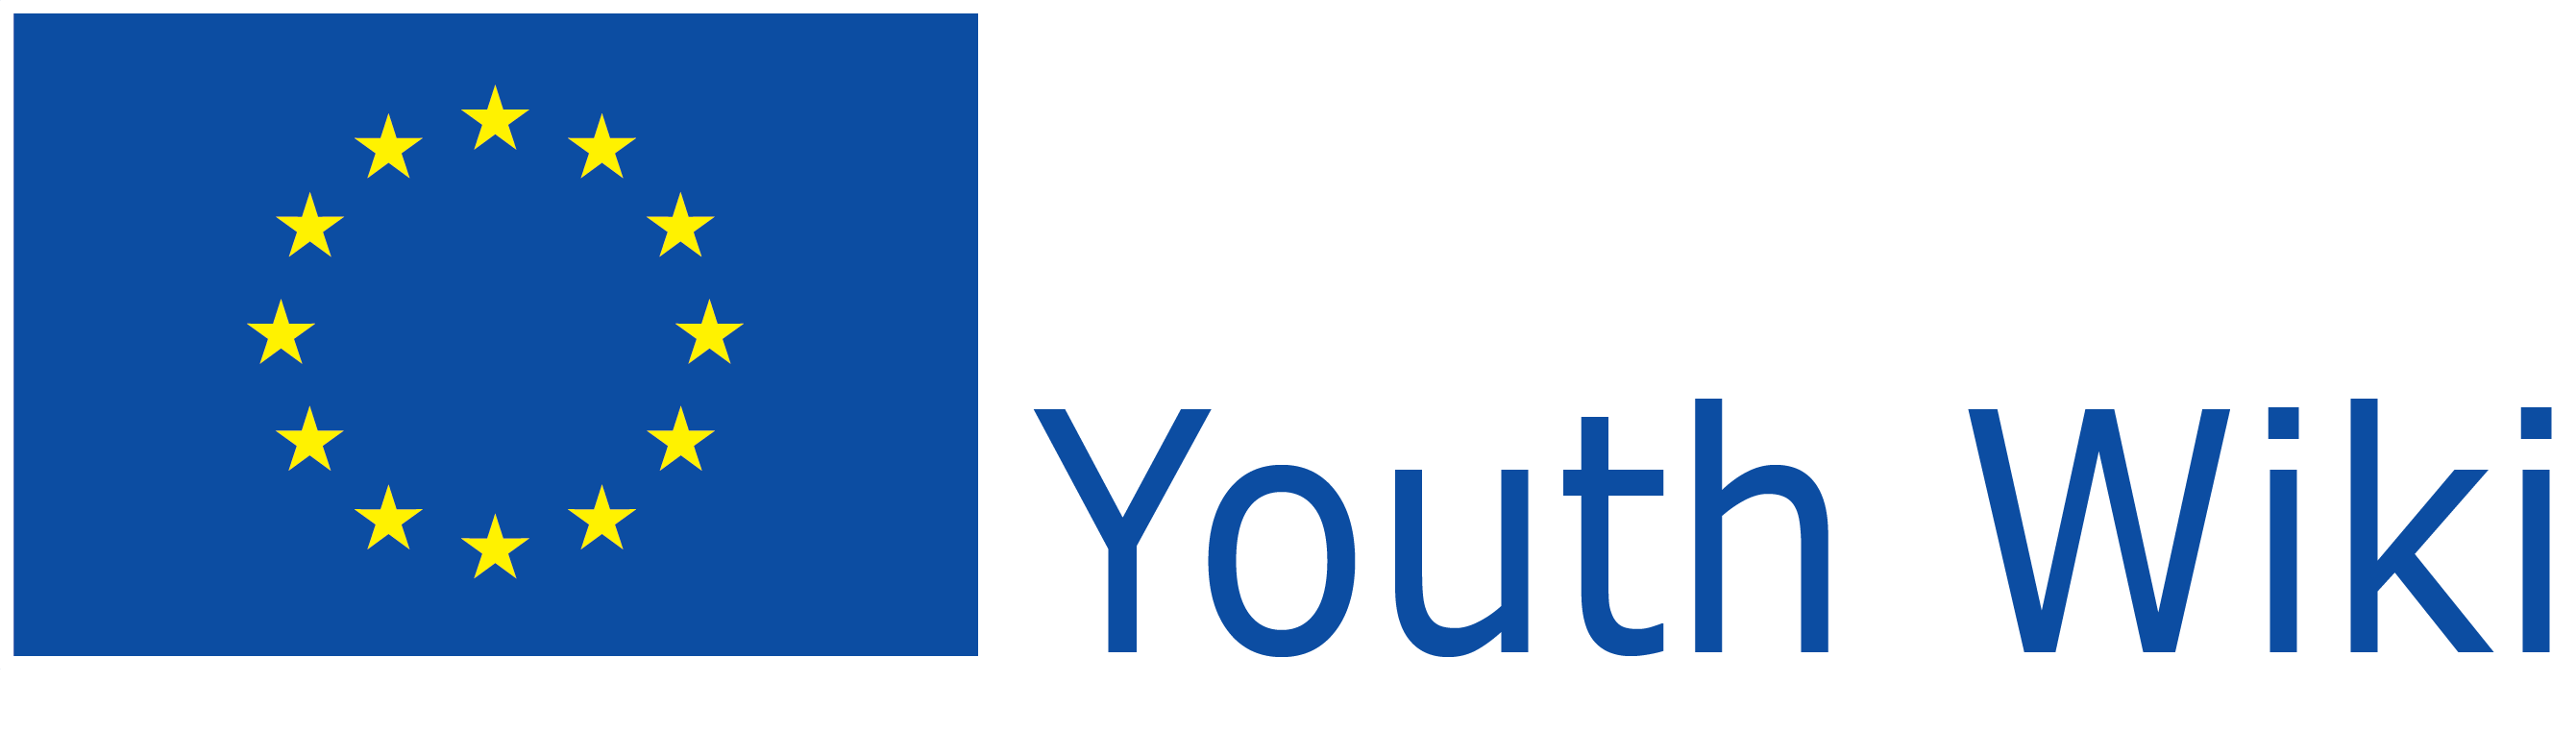 Youth Wiki logo